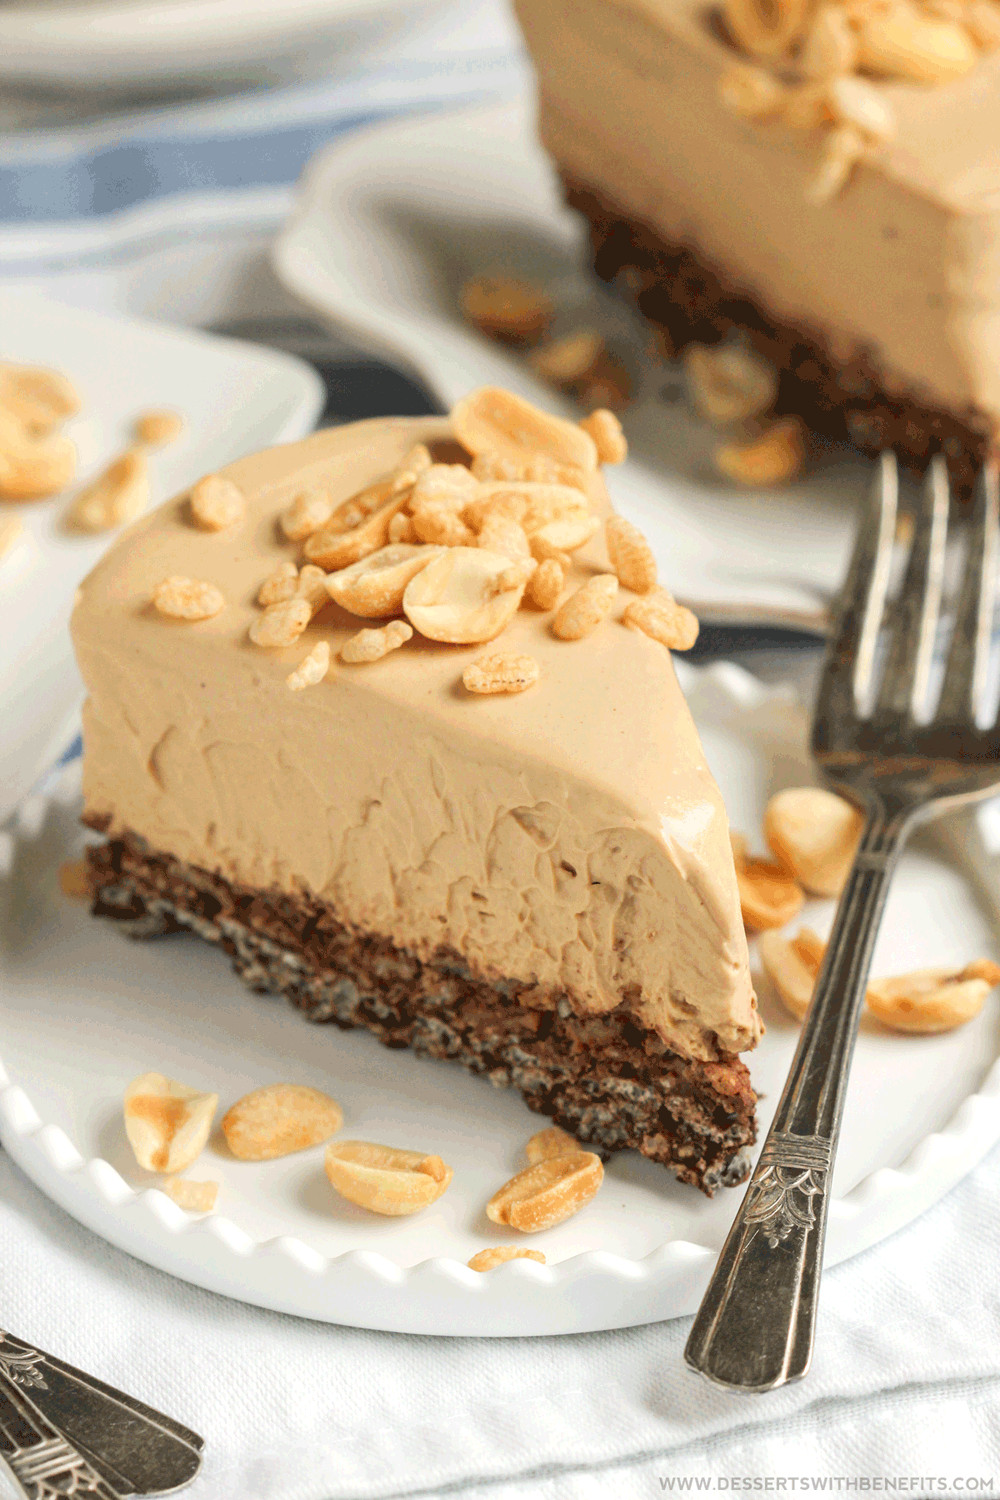 Healthy Peanut Butter Desserts
 Healthy Peanut Butter Chocolate Crunch Pie